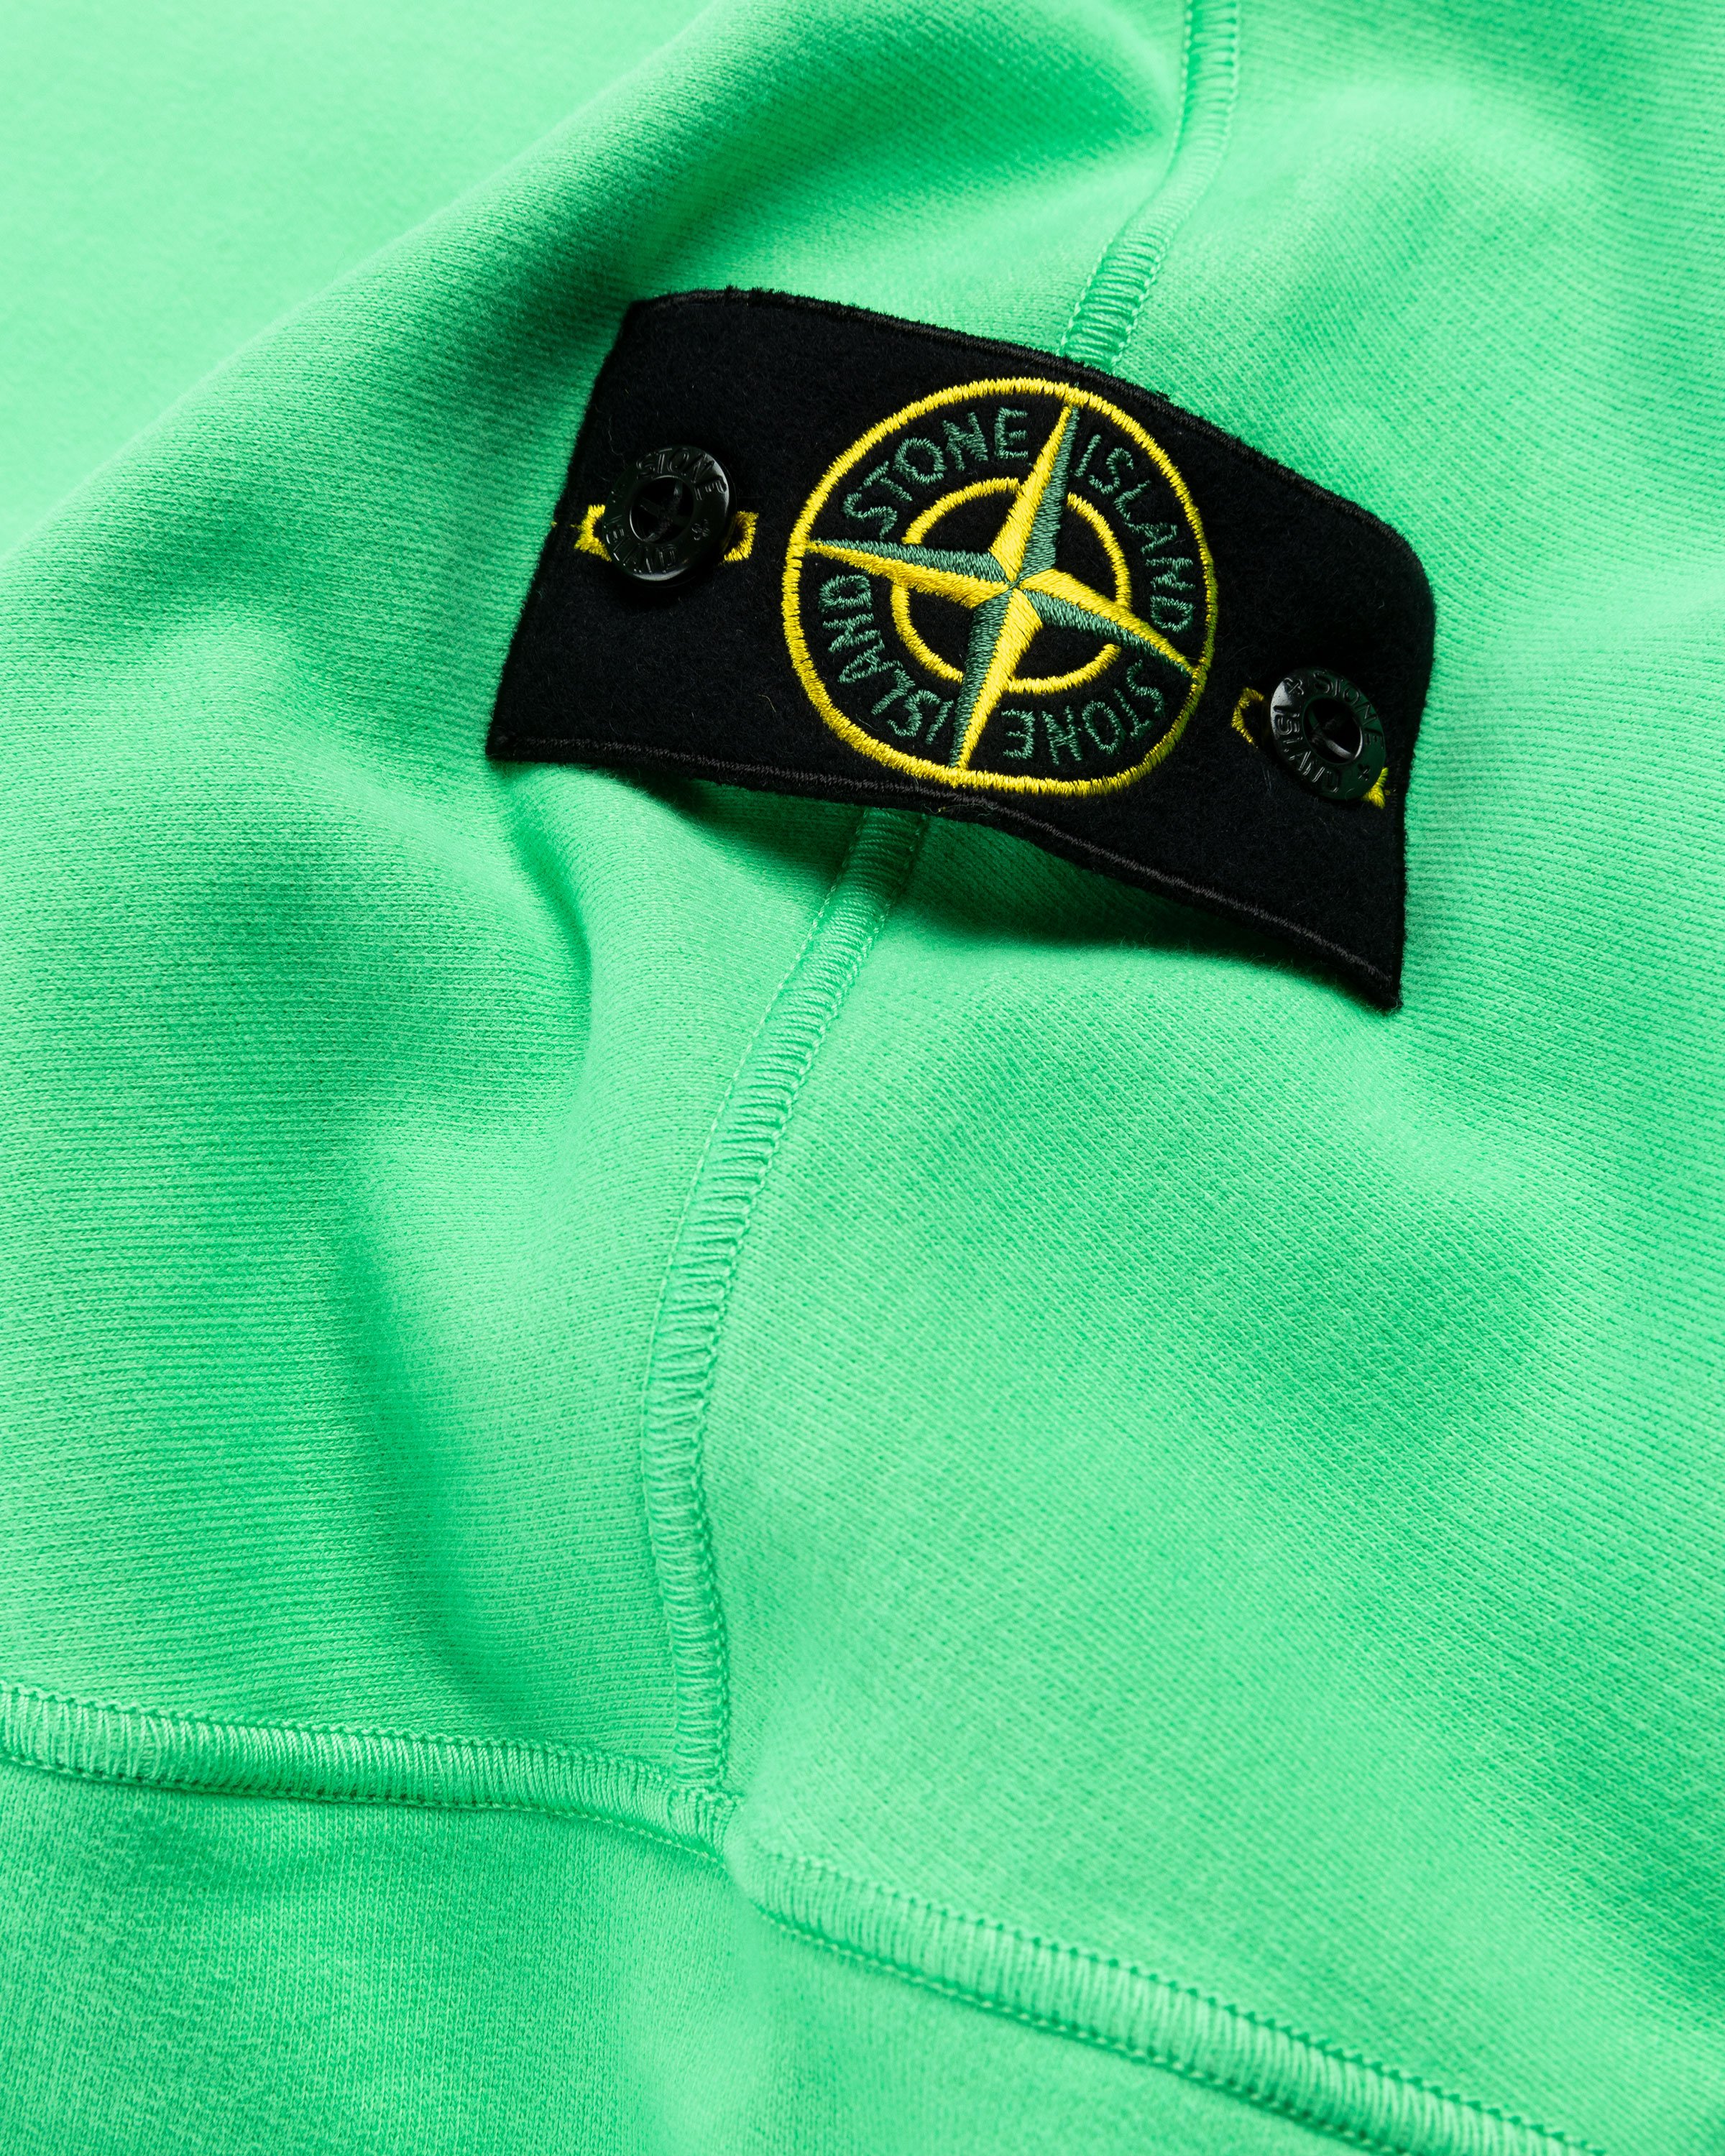 Stone Island - Garment-Dyed Fleece Crewneck Sweatshirt Light Green - Clothing - Green - Image 5